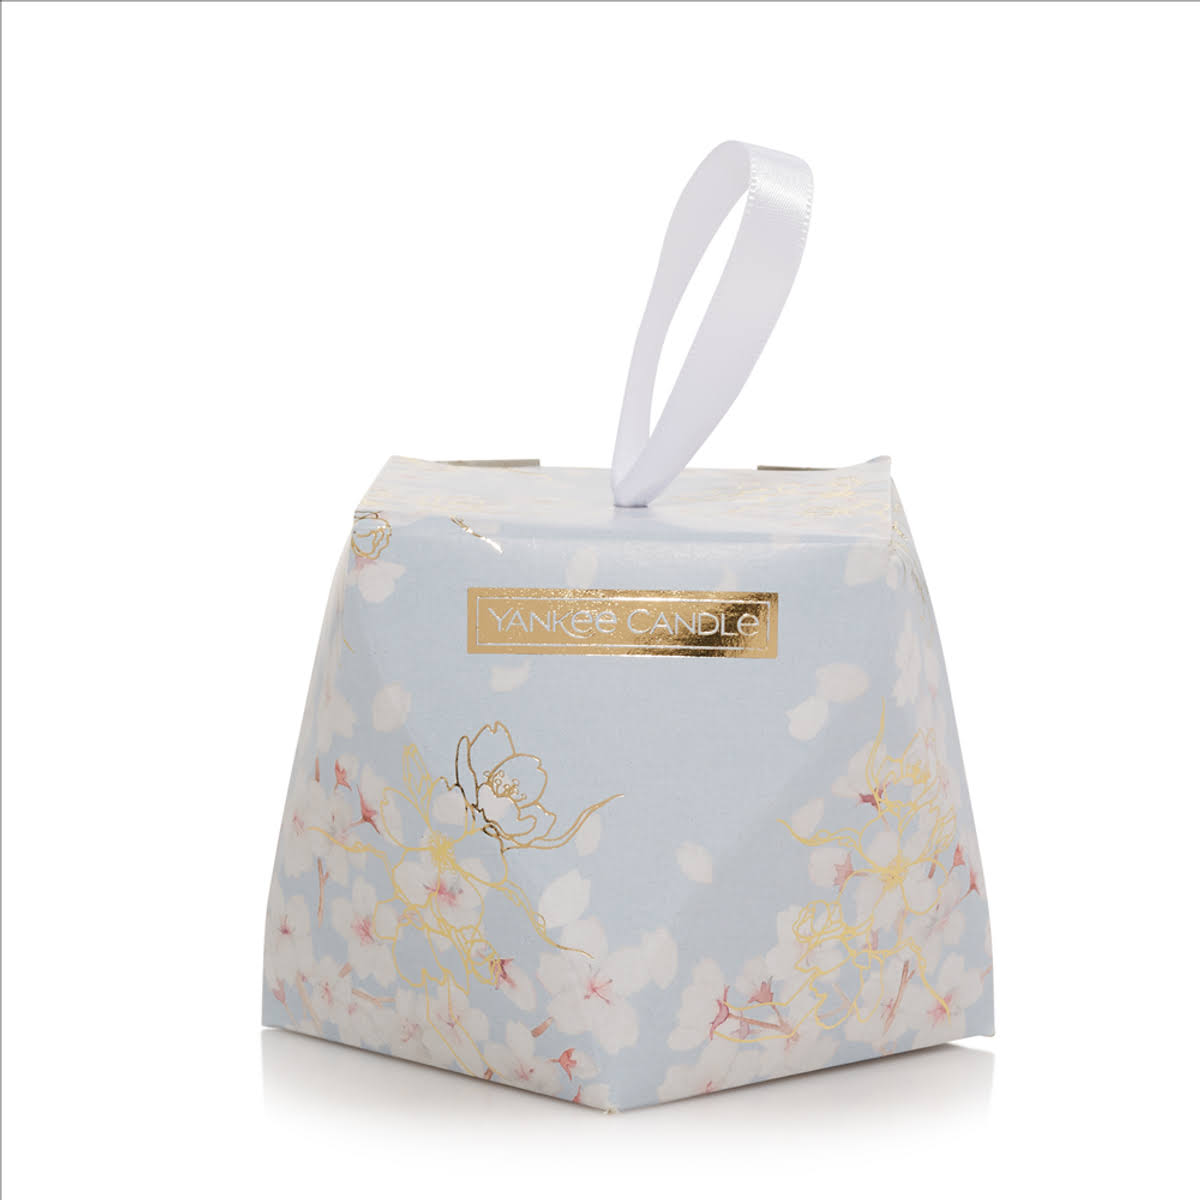 Yankee Candle Sakura Blossom Festival Three Wax Melts Gift Set